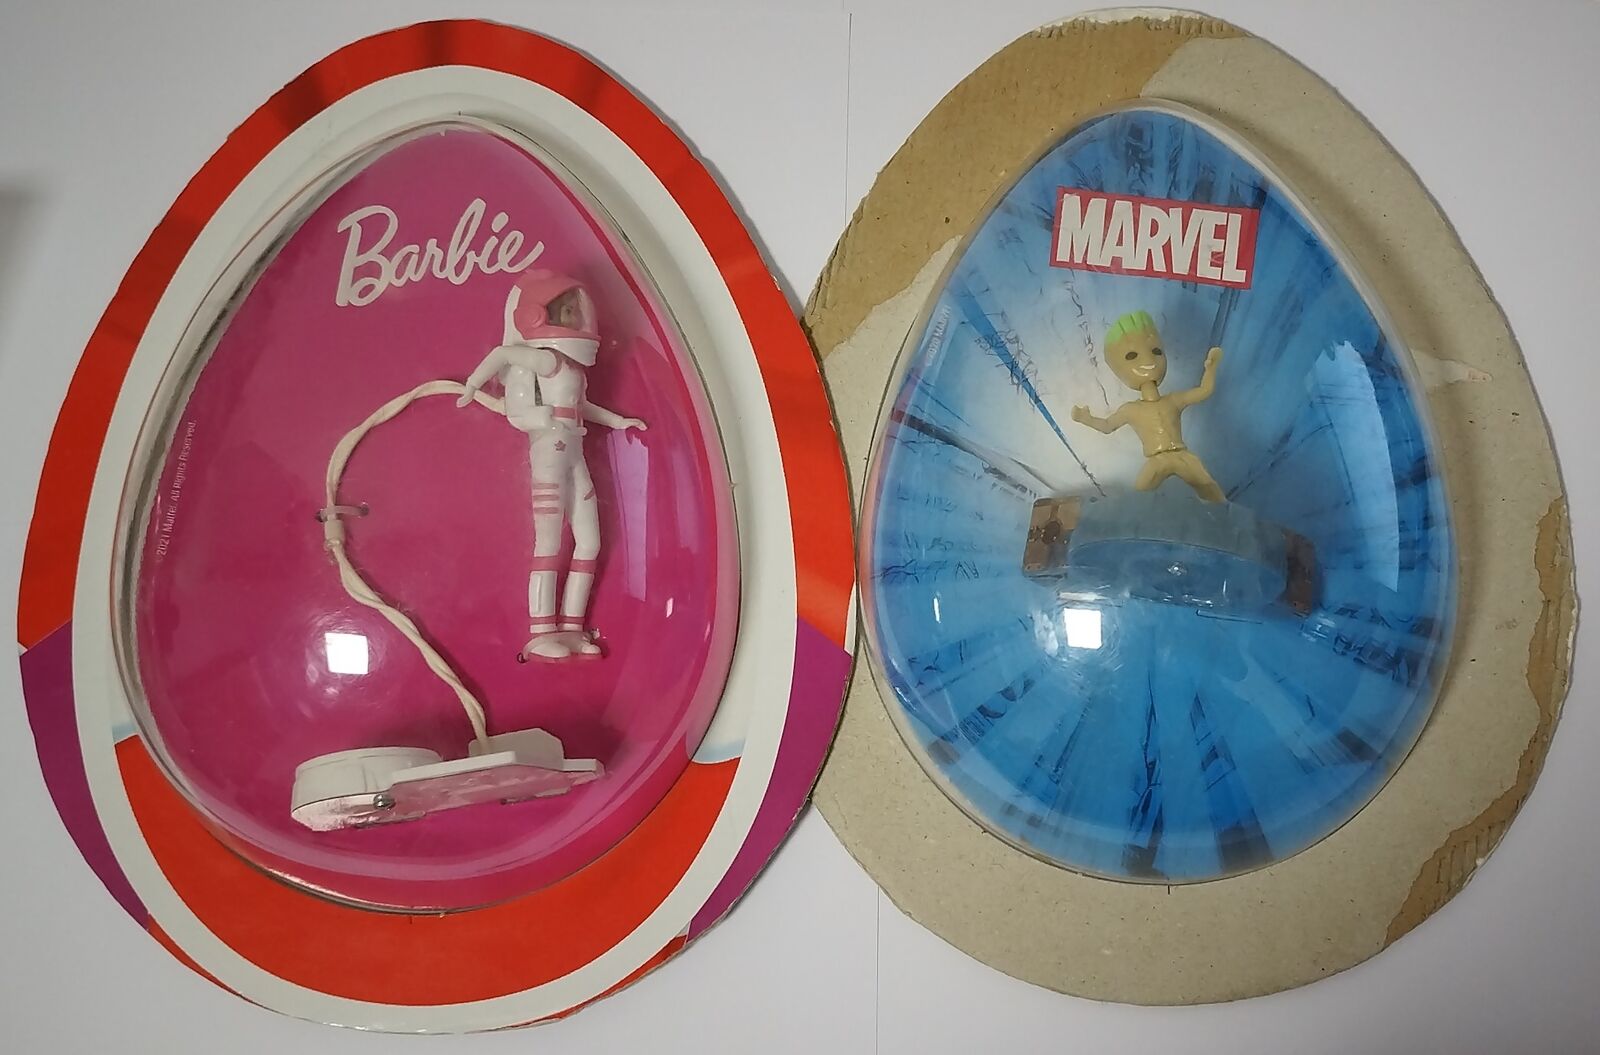 Kinder Surprise Easter Eggs Lot 2 Promo Figures Groot Astronaut Barbie Display